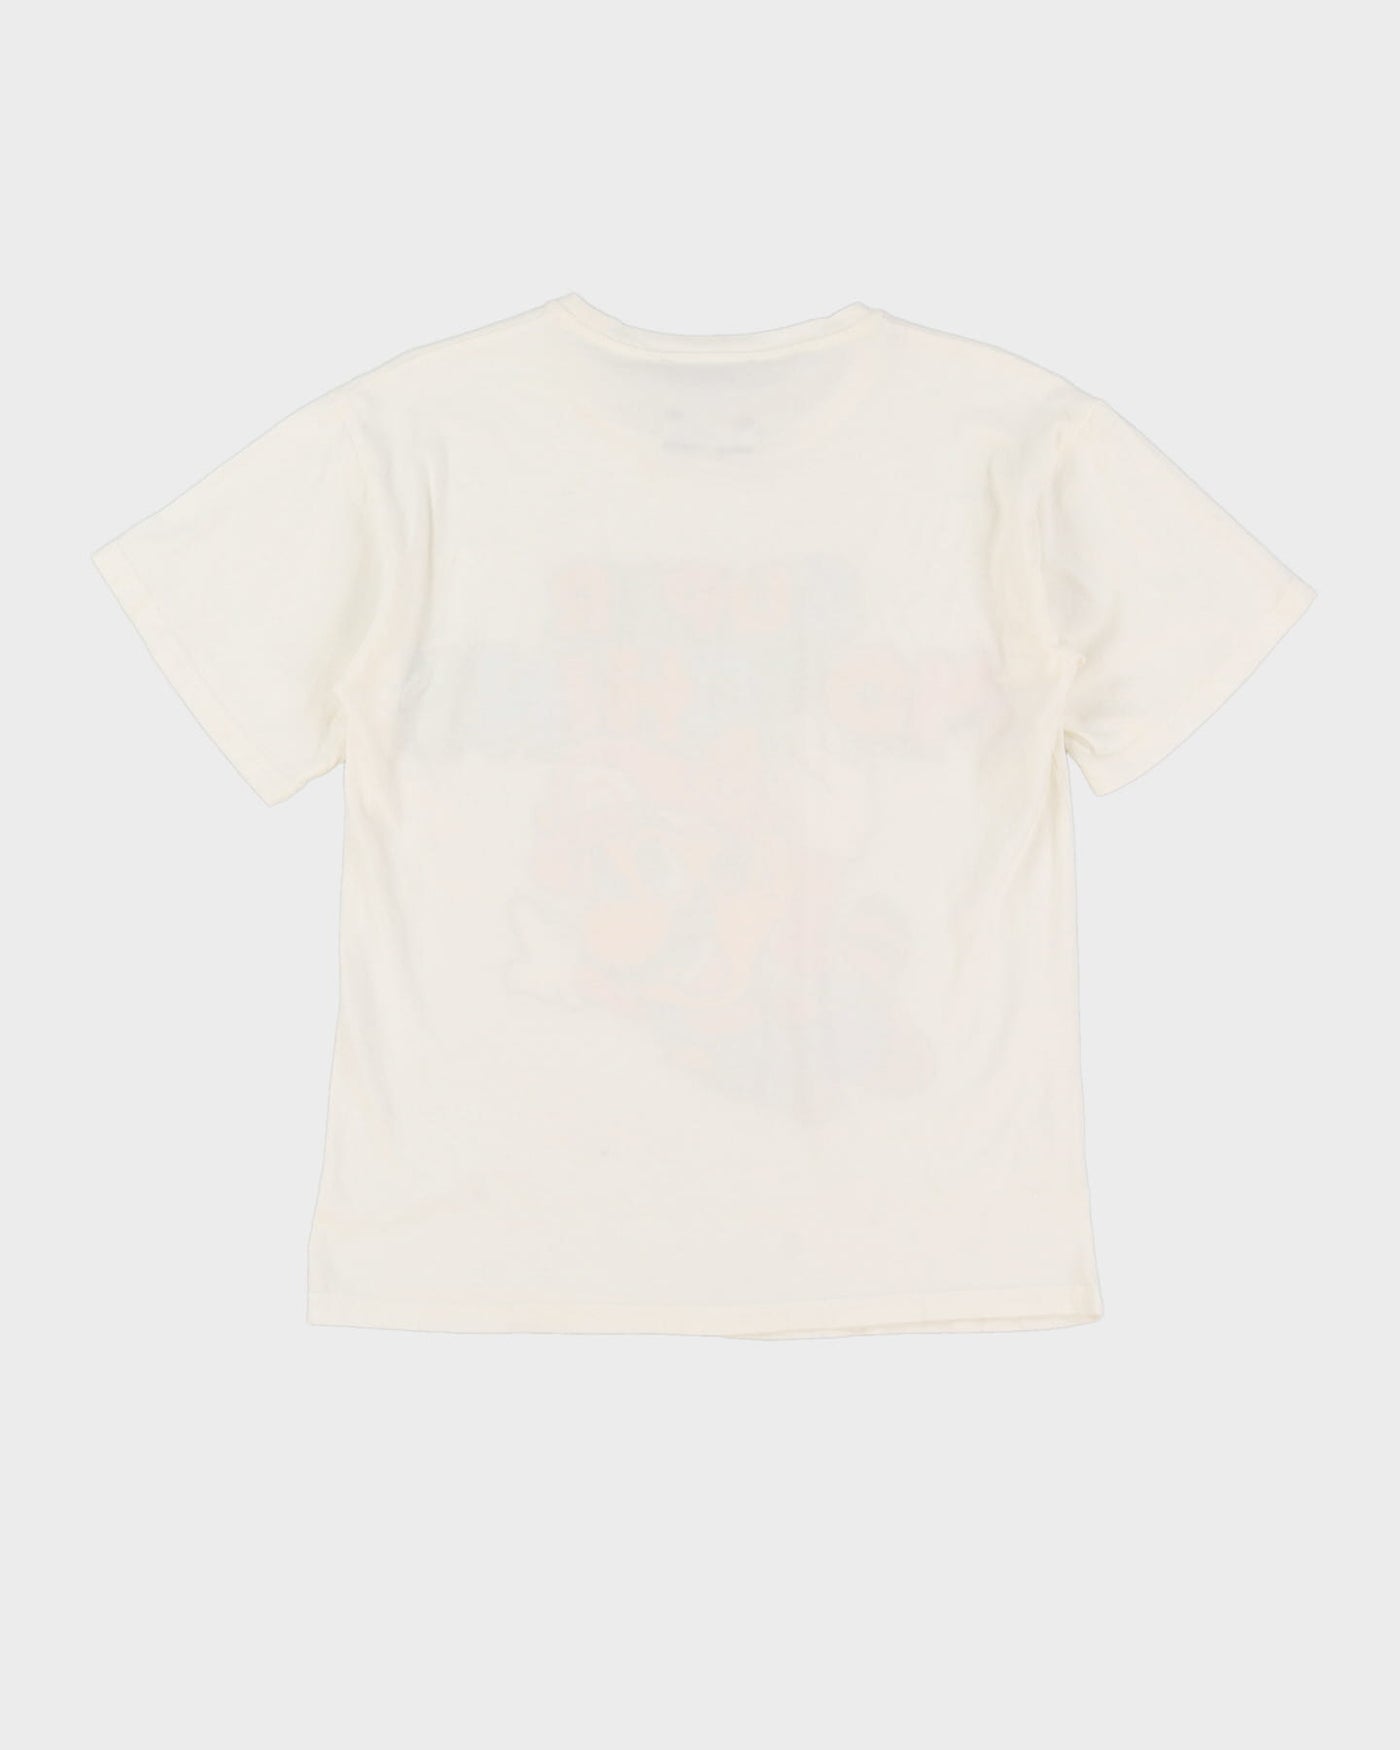 SS16 Super Moschino Mario Collaboration White Designer Oversized T-Shirt - S